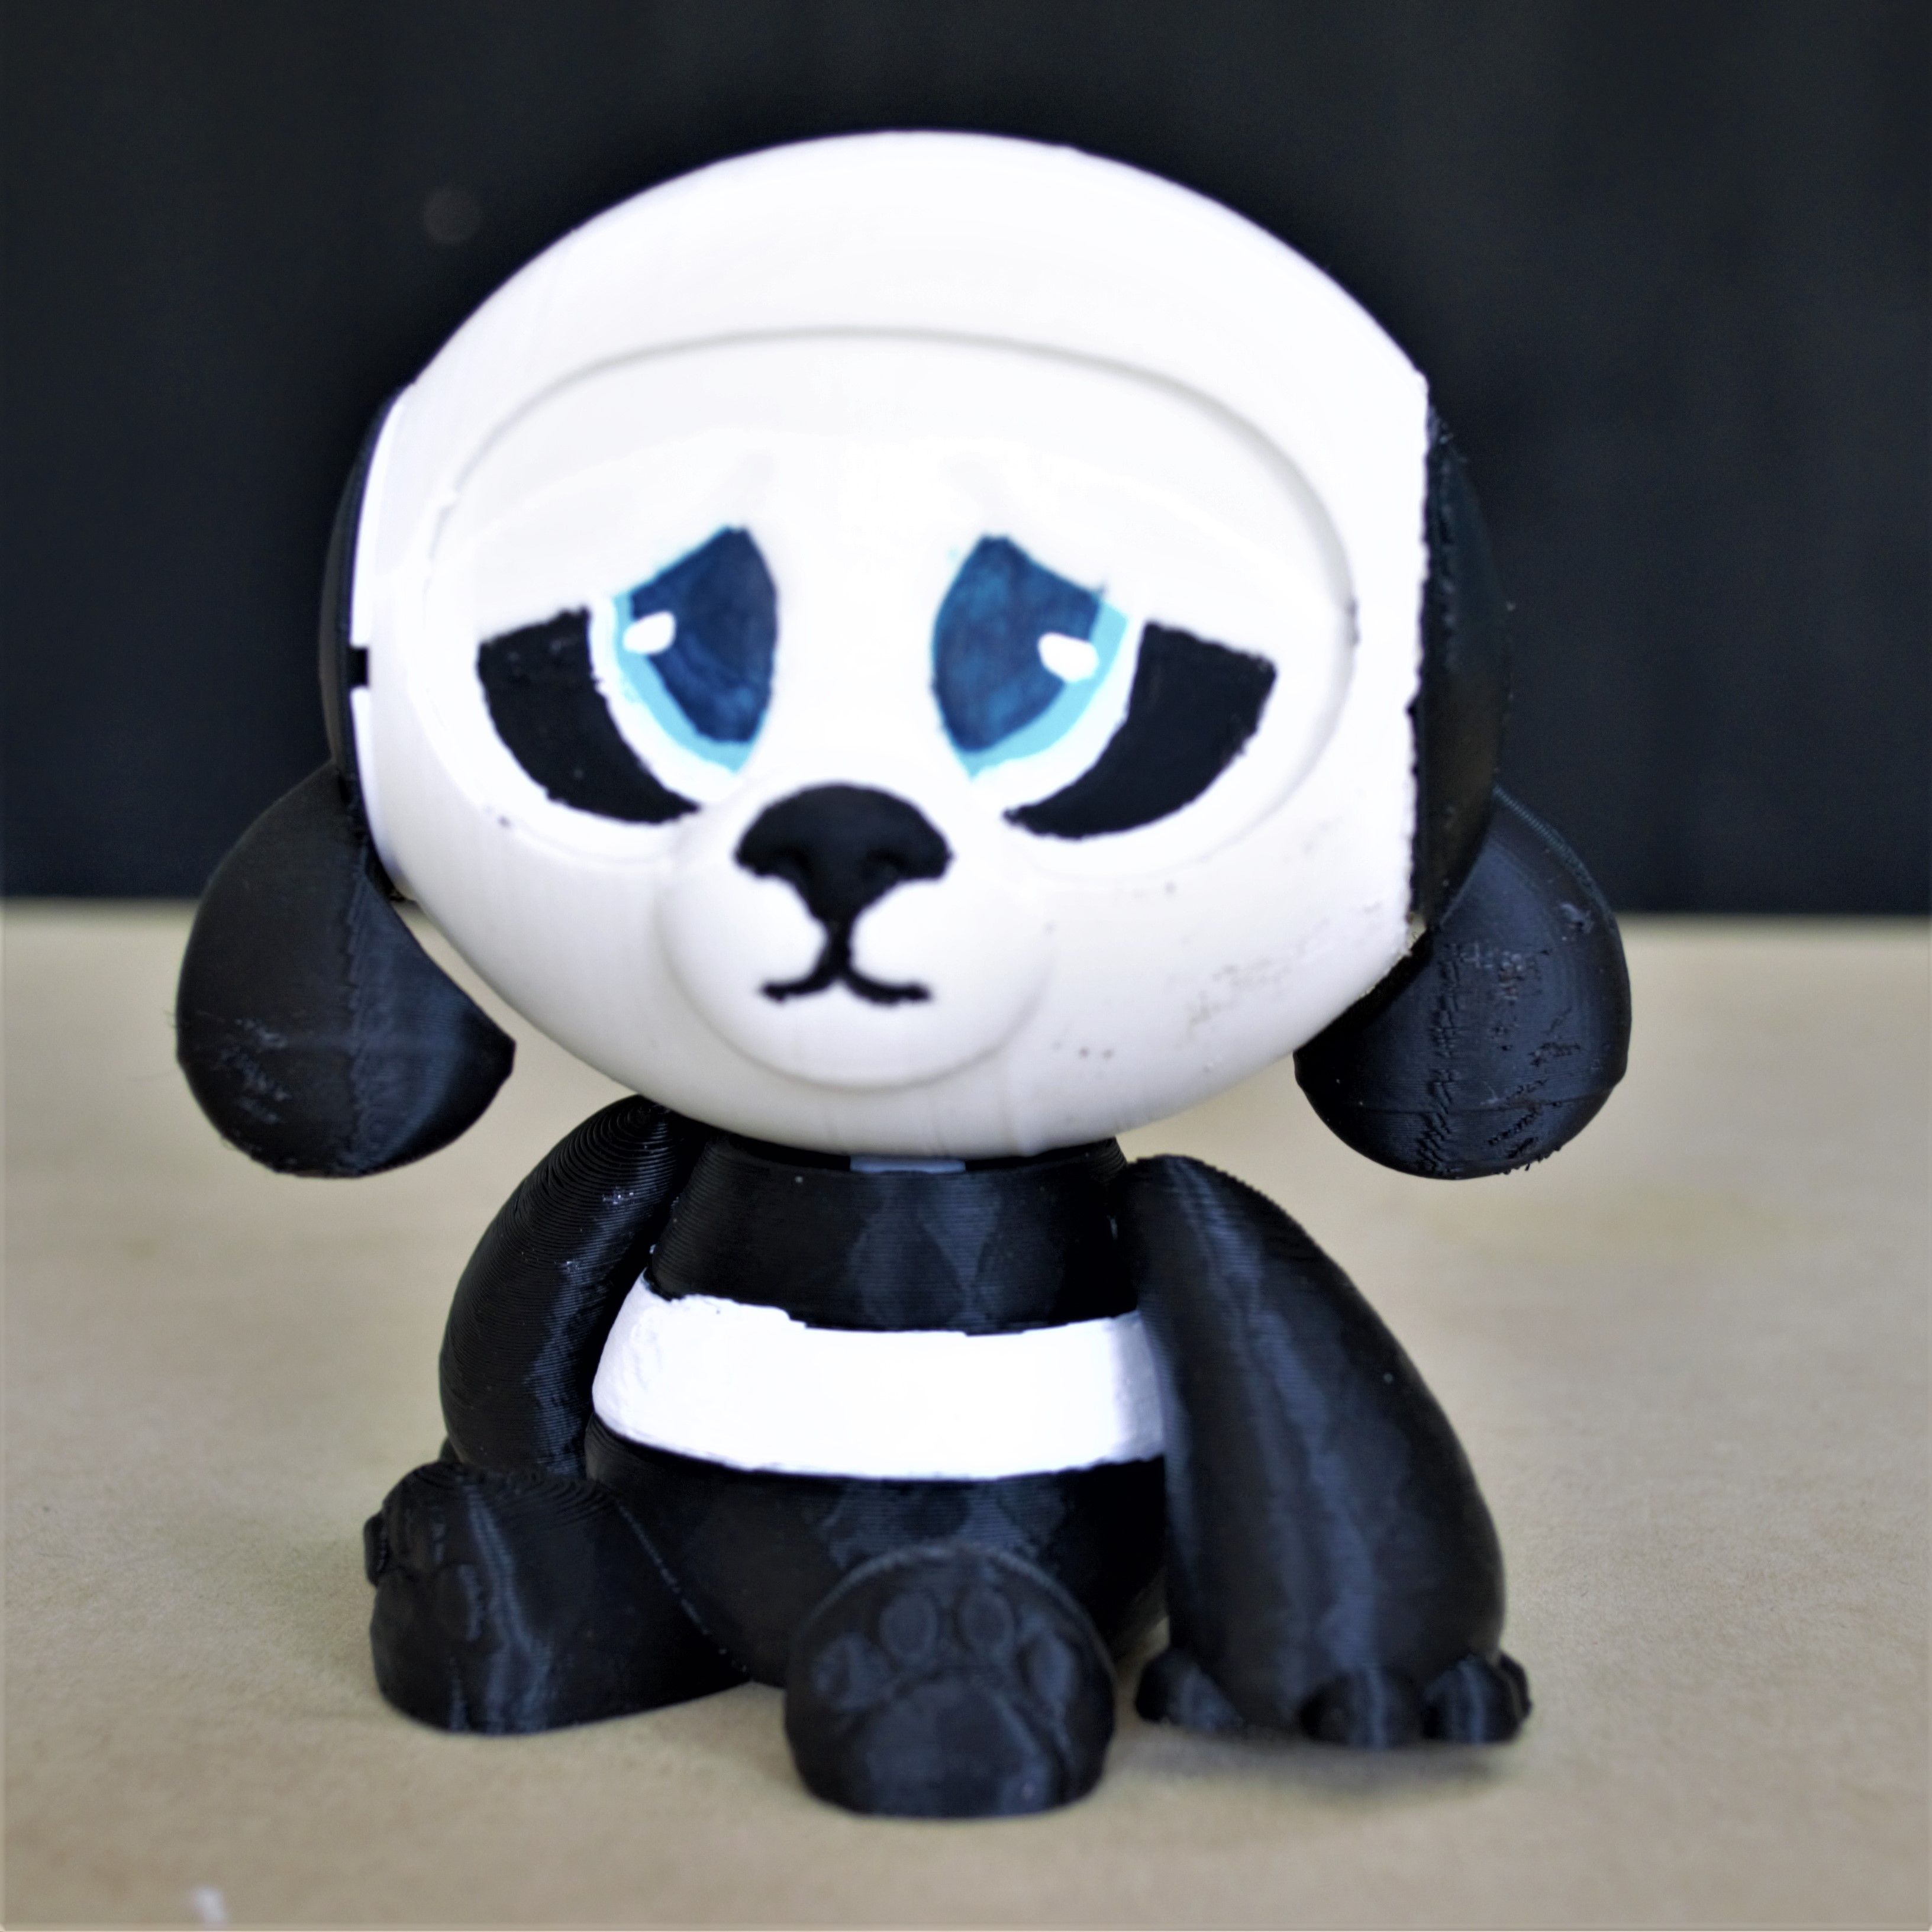 Triste.jpg Download STL file Panda Moodis • Model to 3D print, Finnick_nv